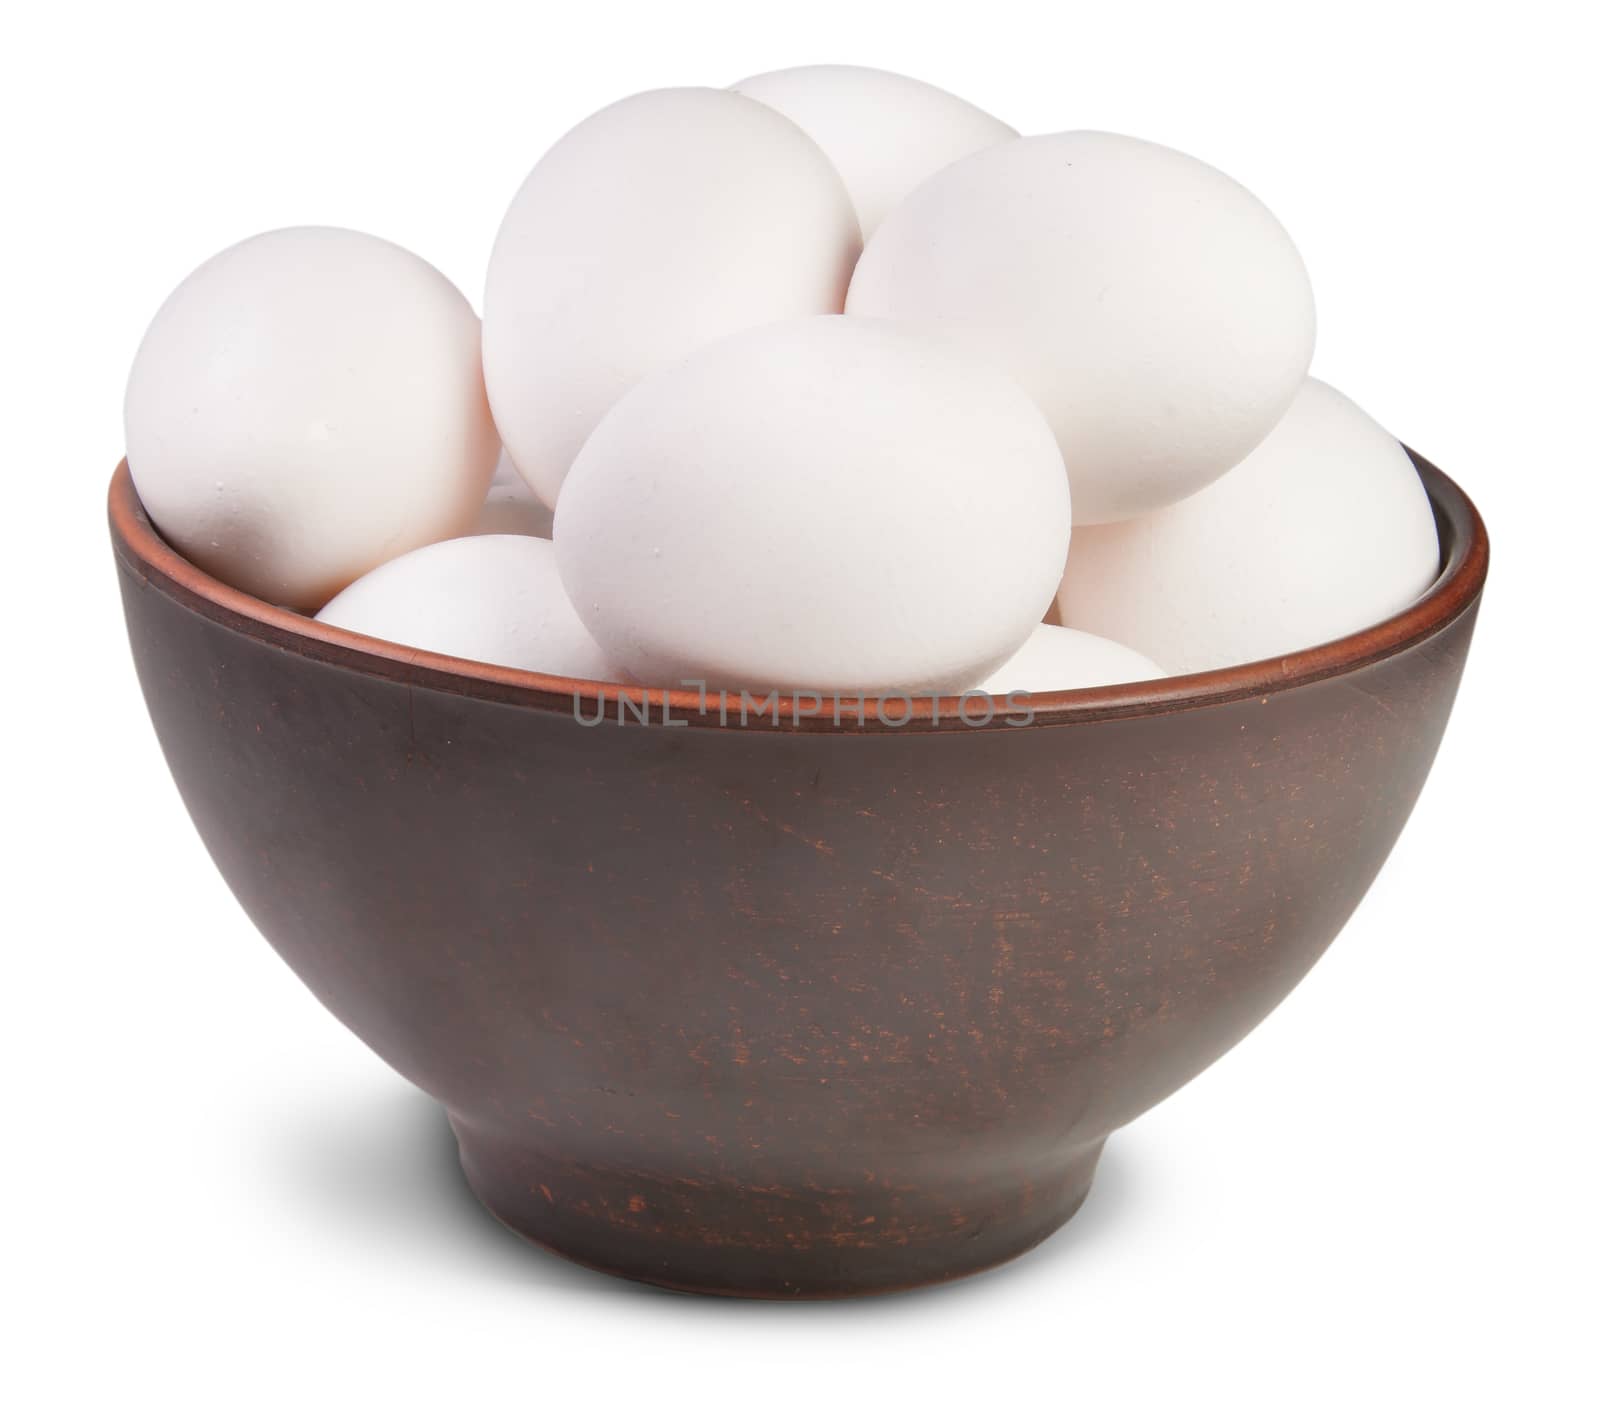 White Eggs Into Ceramic Bowl by Cipariss